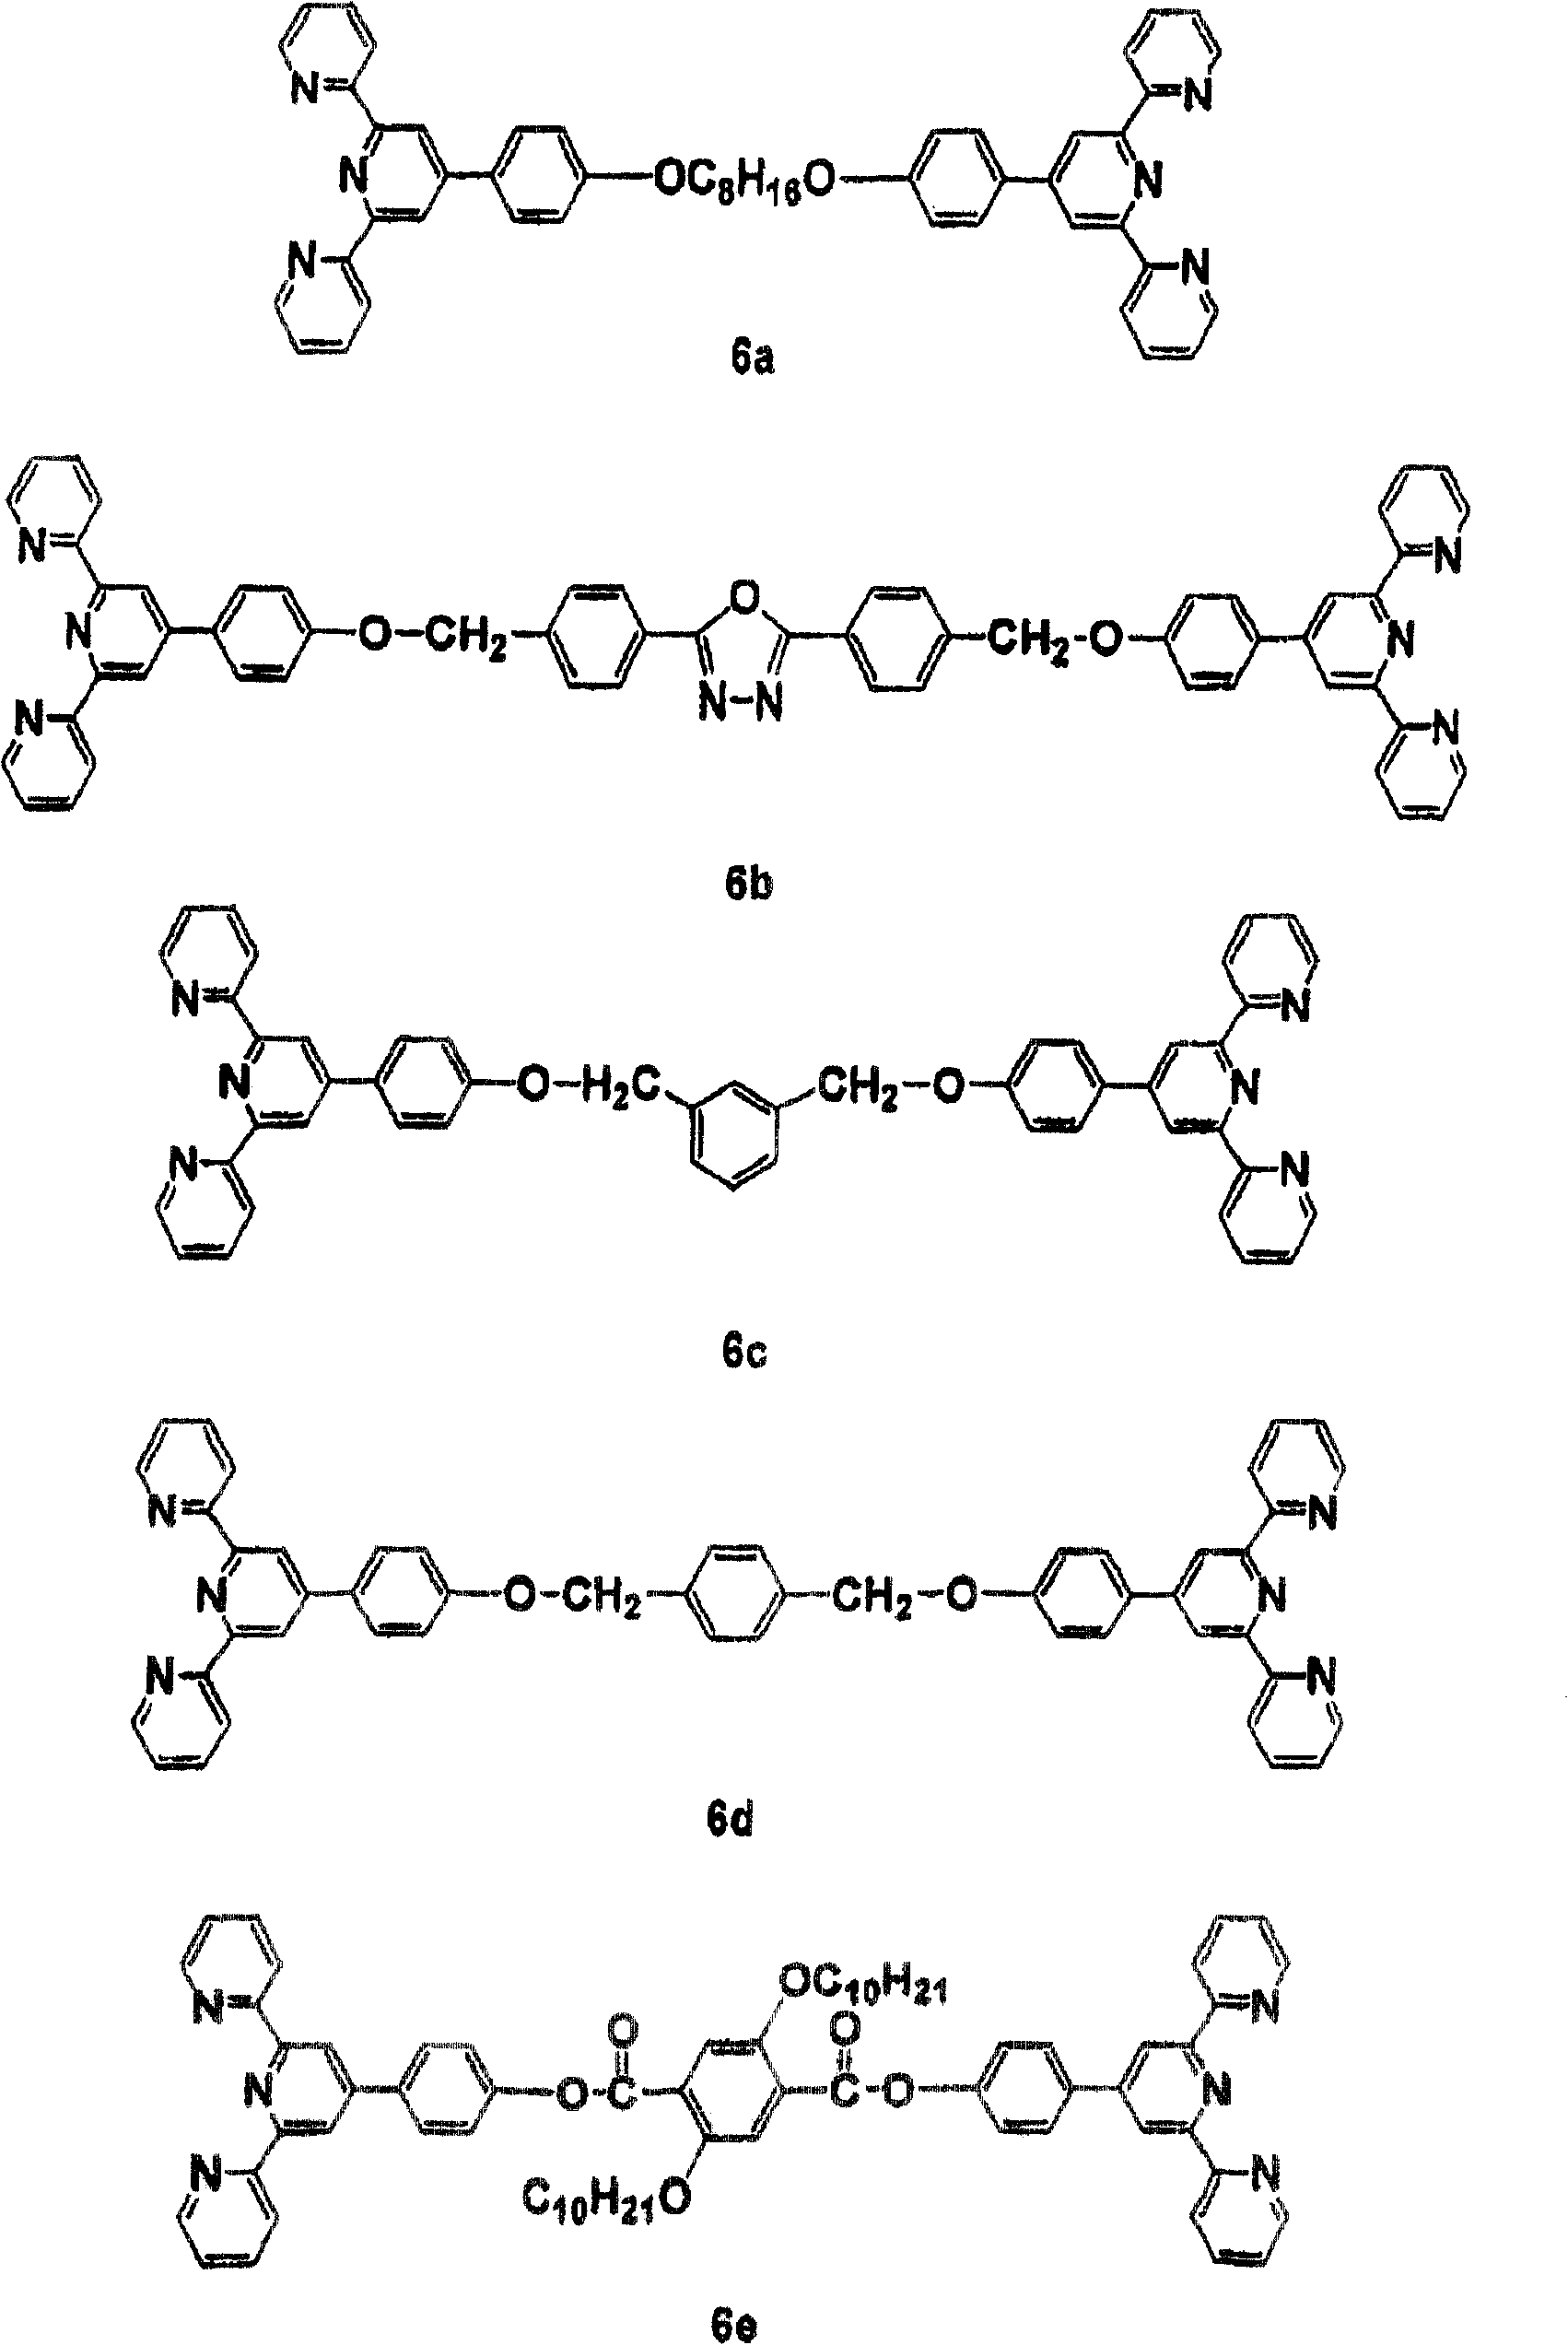 Electroluminescent metallo-supramolecules with terpyridine-based groups